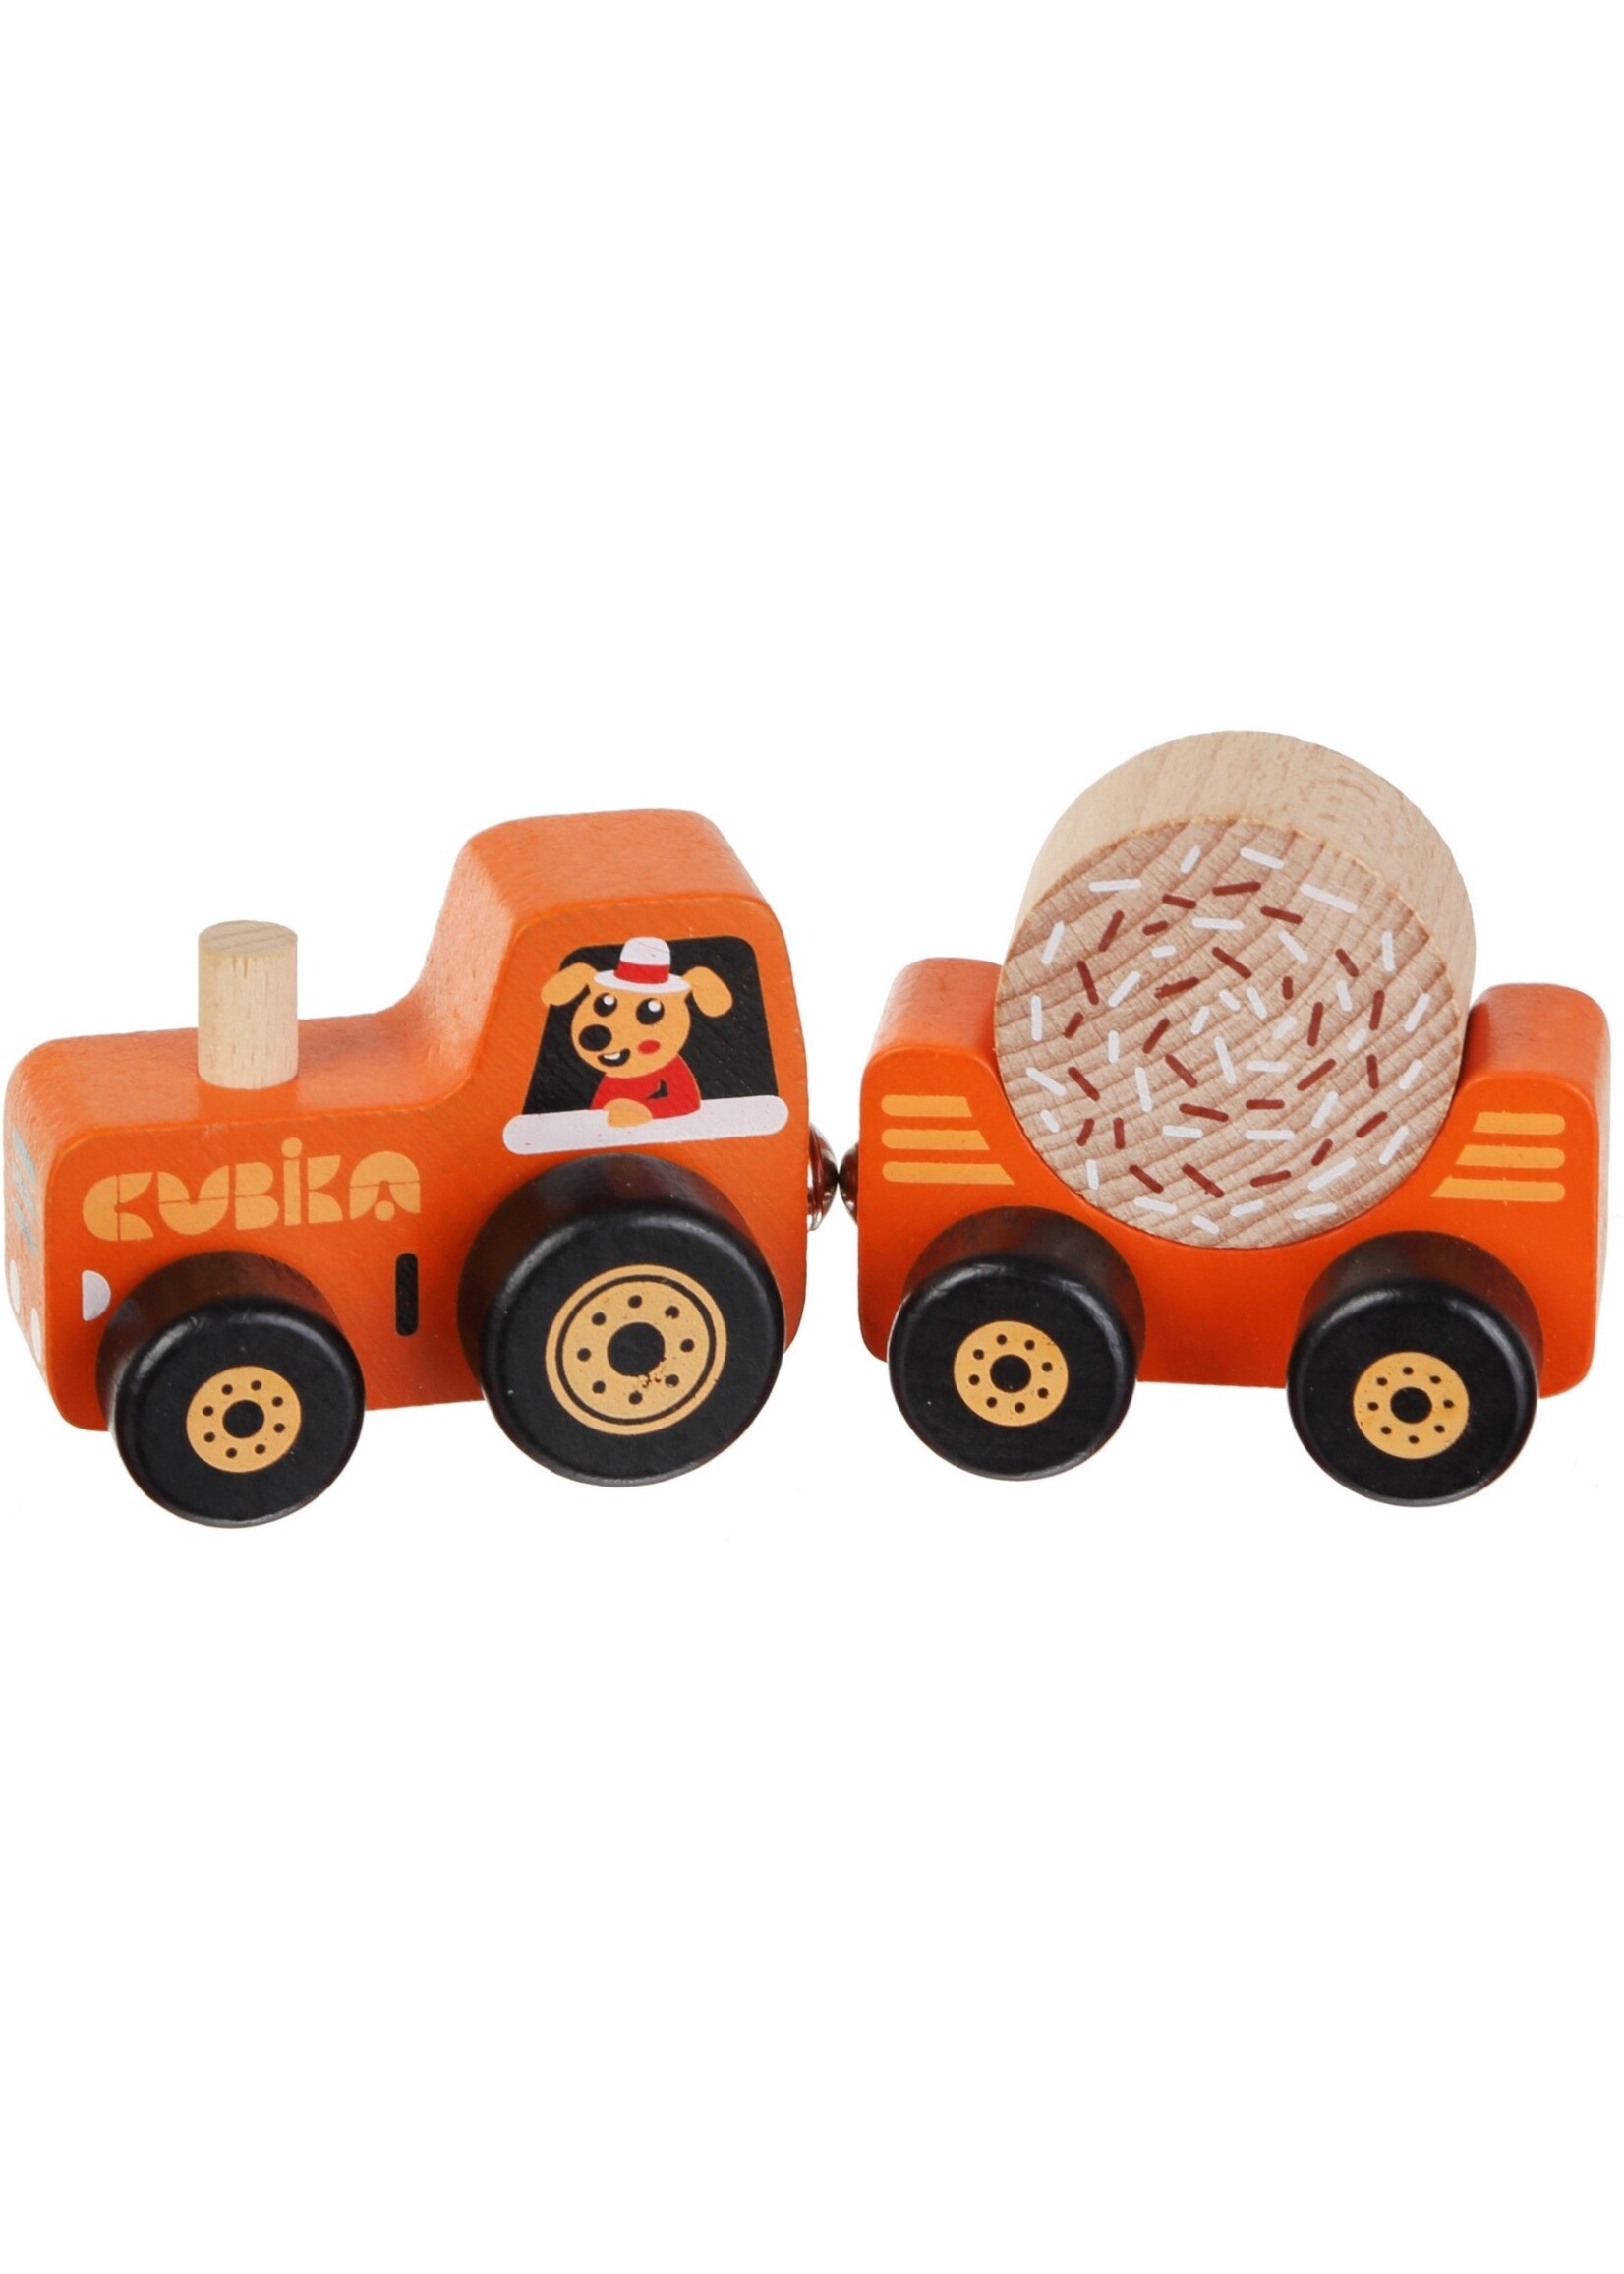 Cubika Cubika Wooden toy "Tractor"